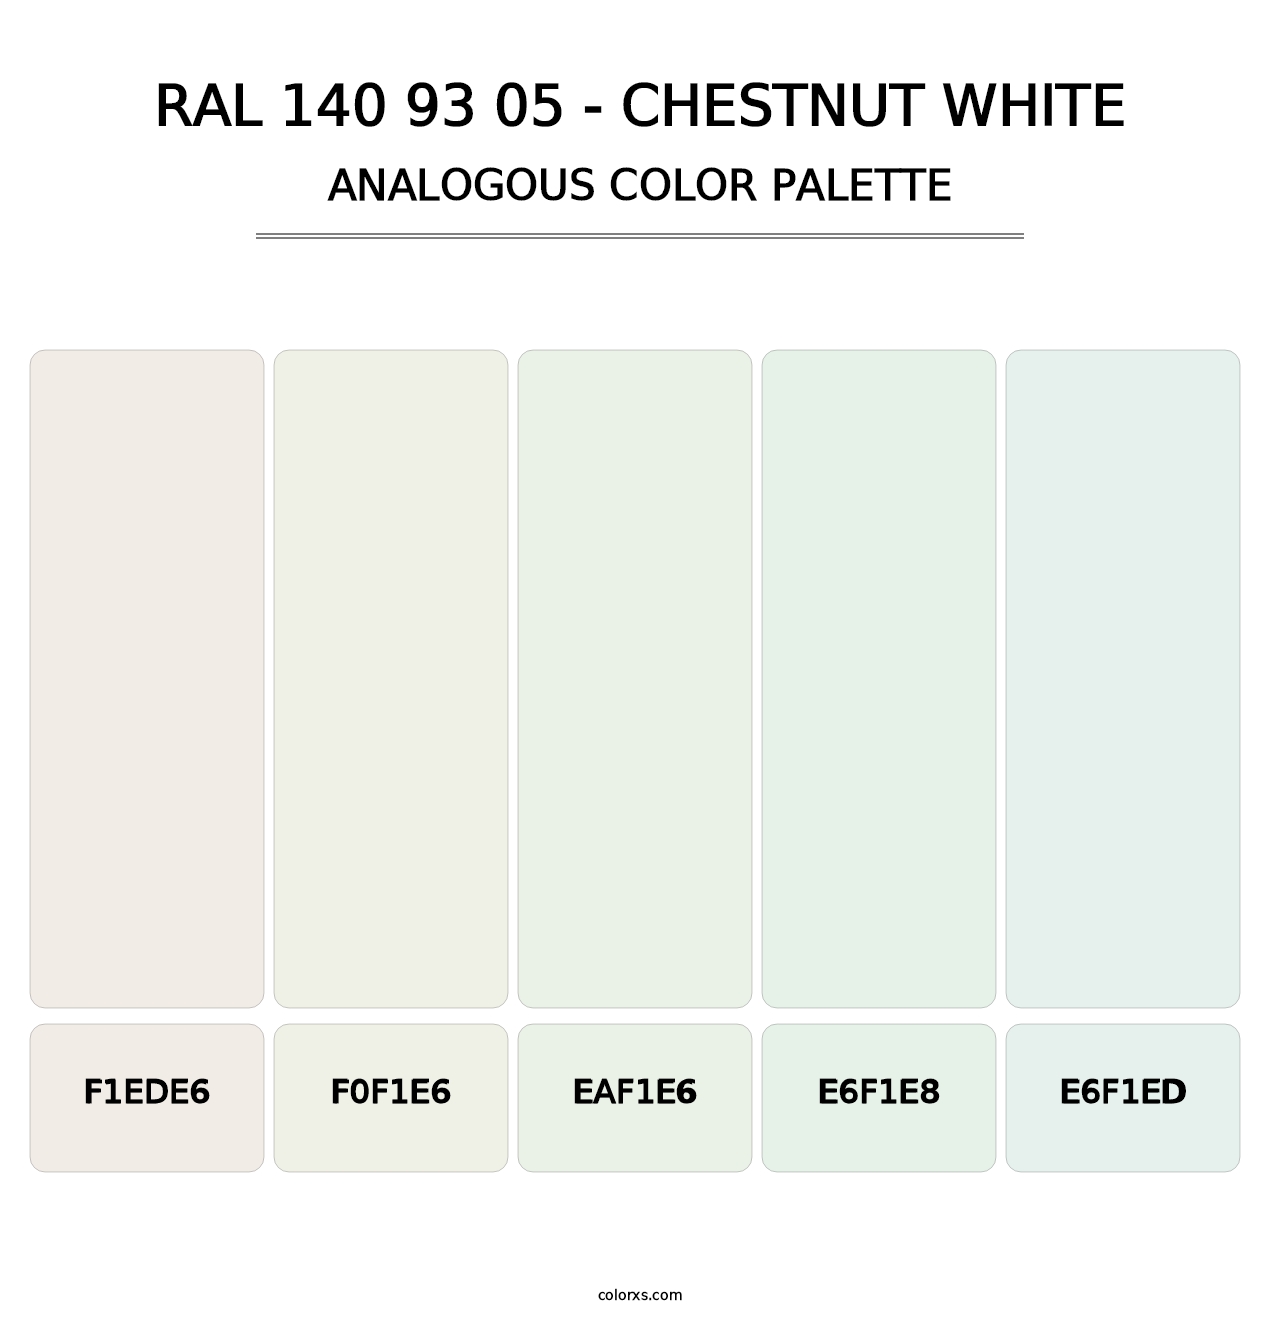 RAL 140 93 05 - Chestnut White - Analogous Color Palette